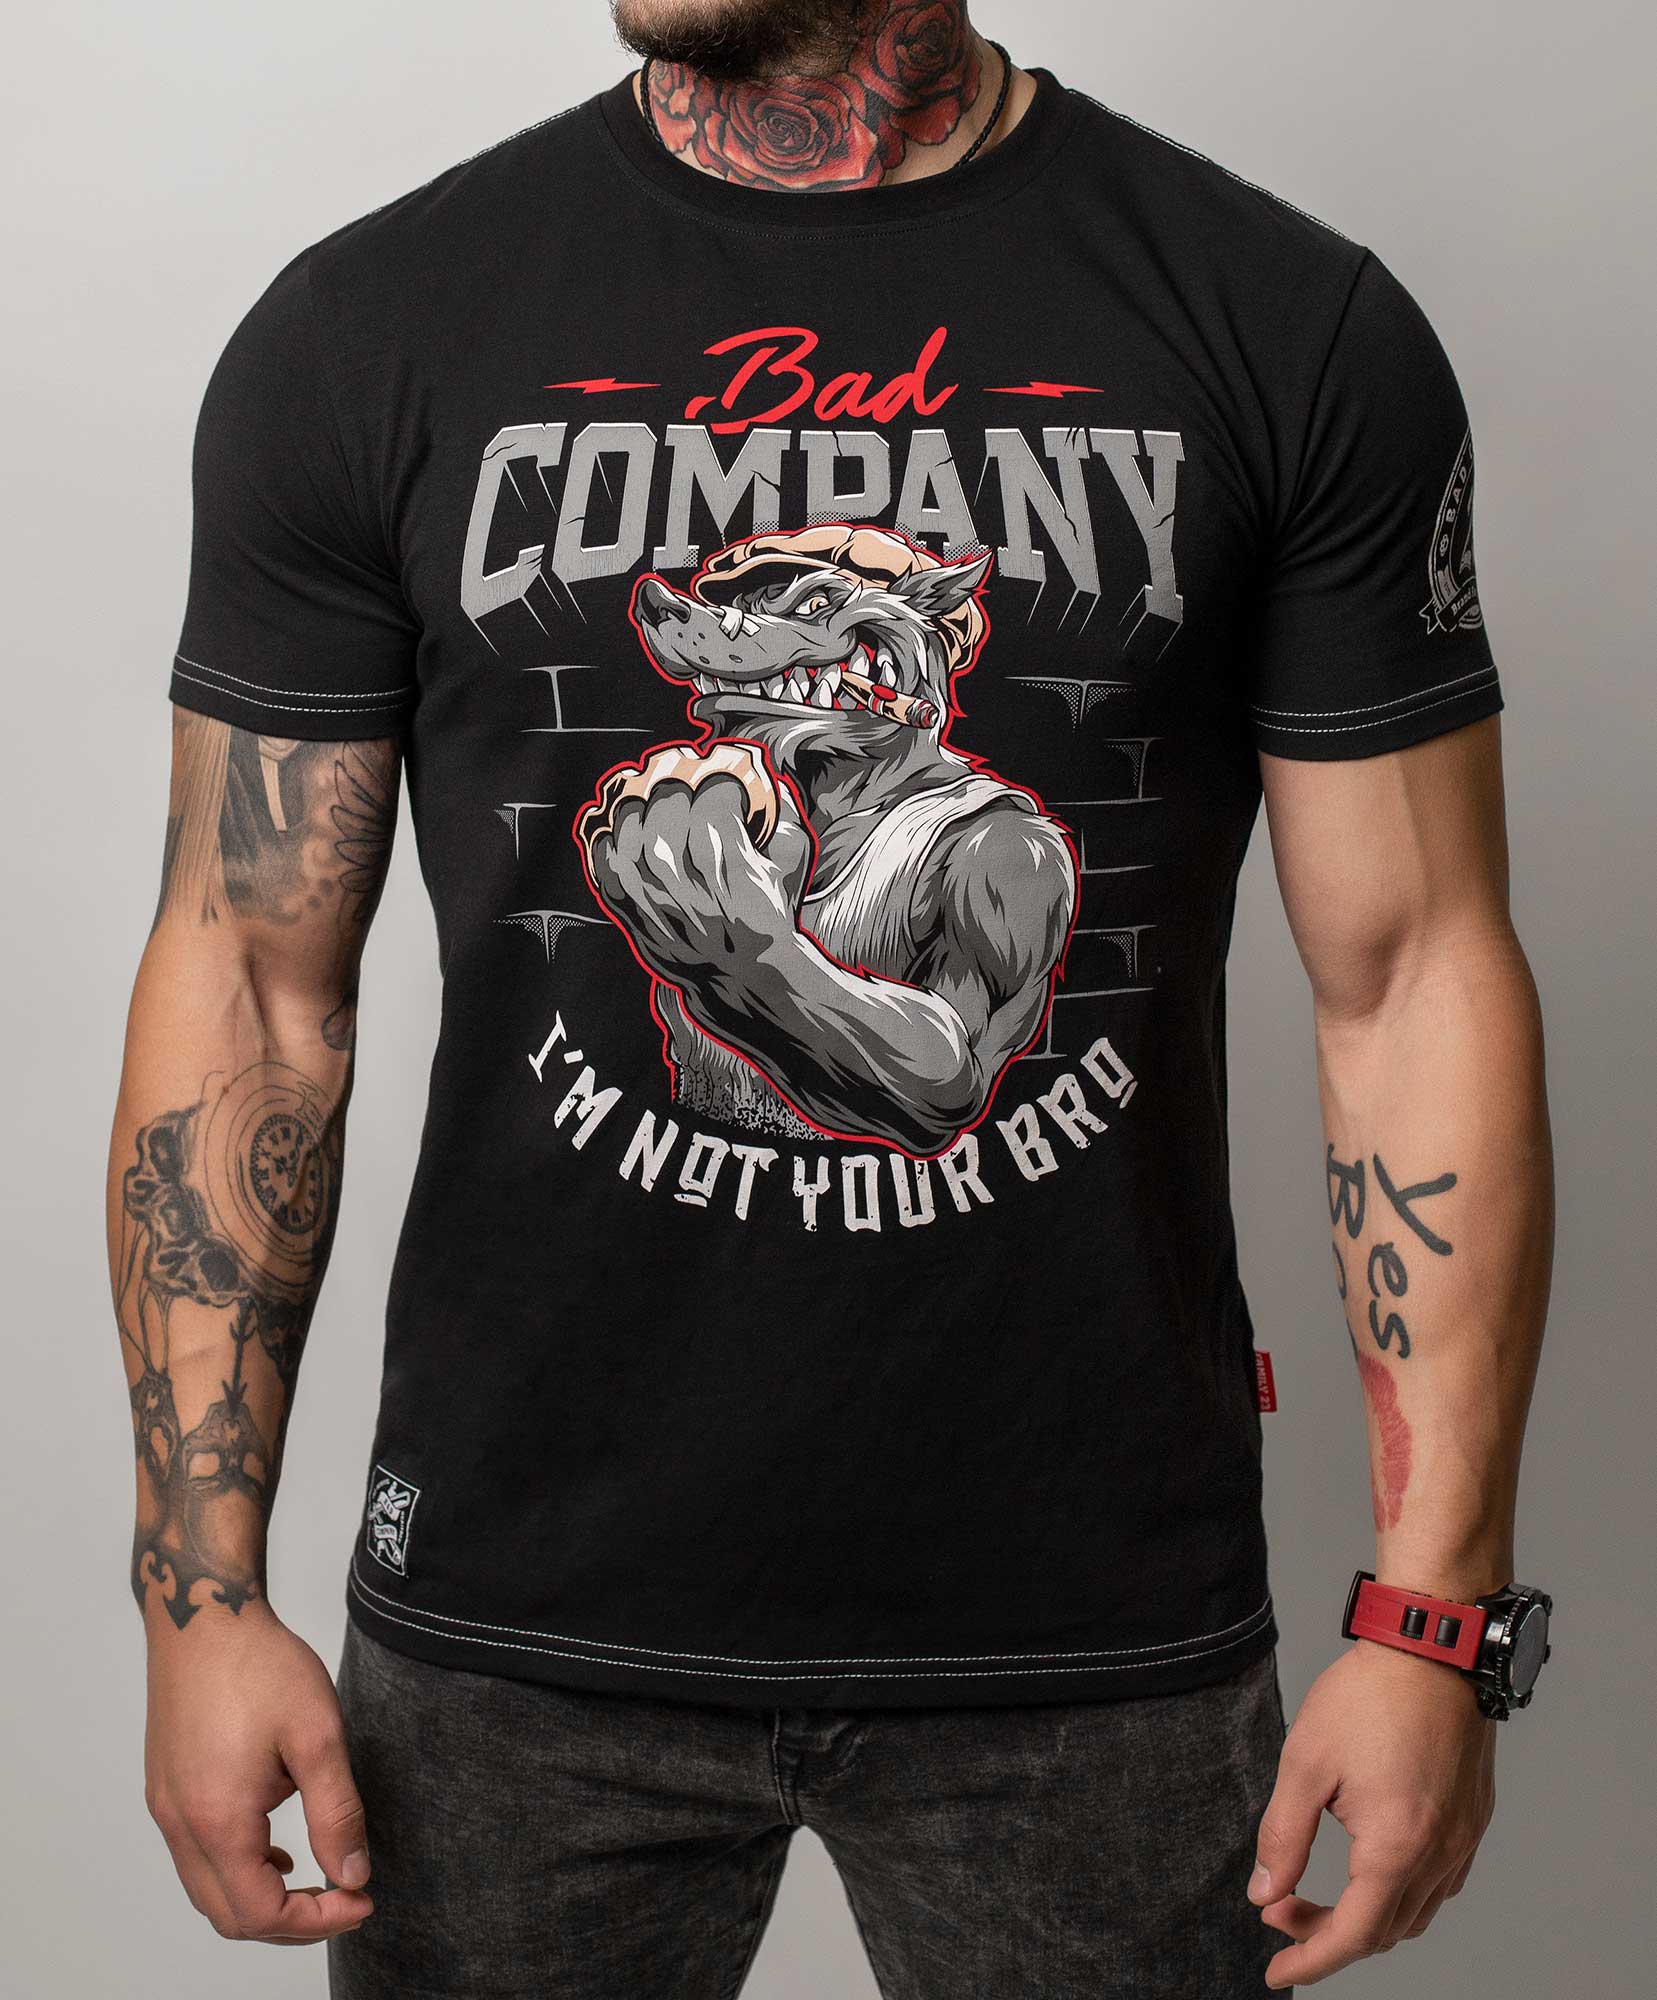 Bad Company футболка  Not you bro